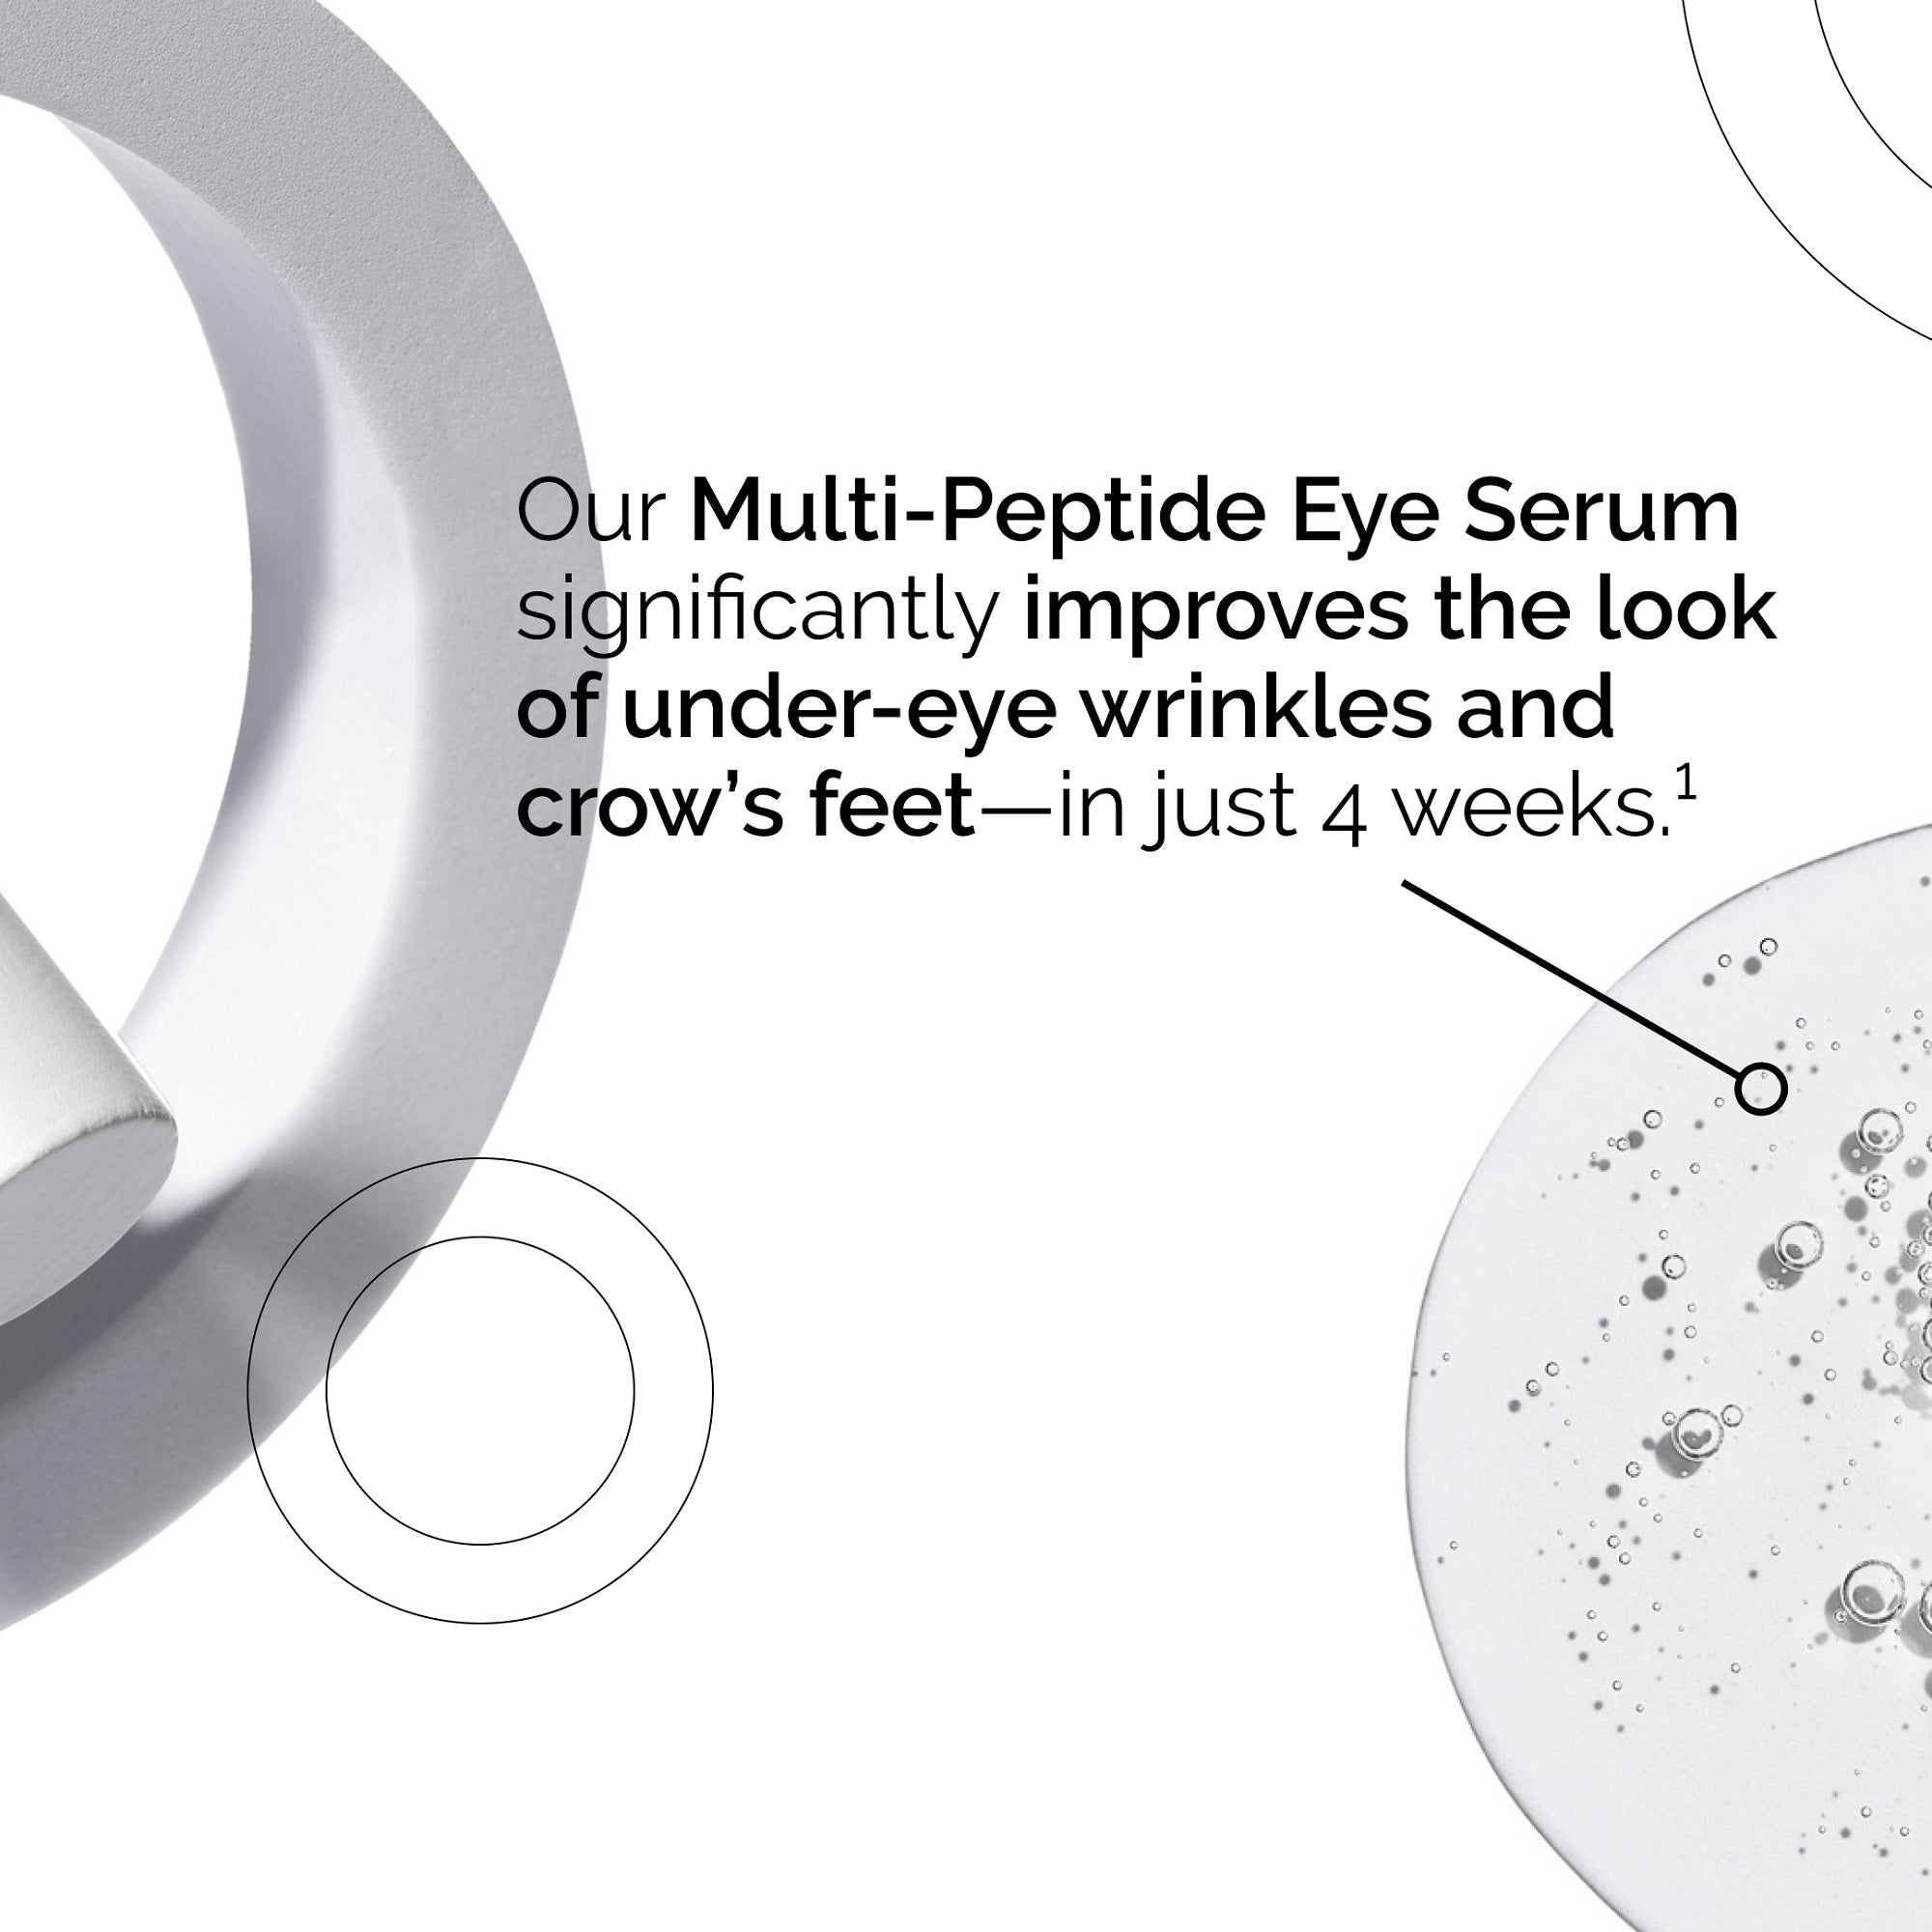 copy-of-the-ordinary-multi-peptide-eye-serum-15ml